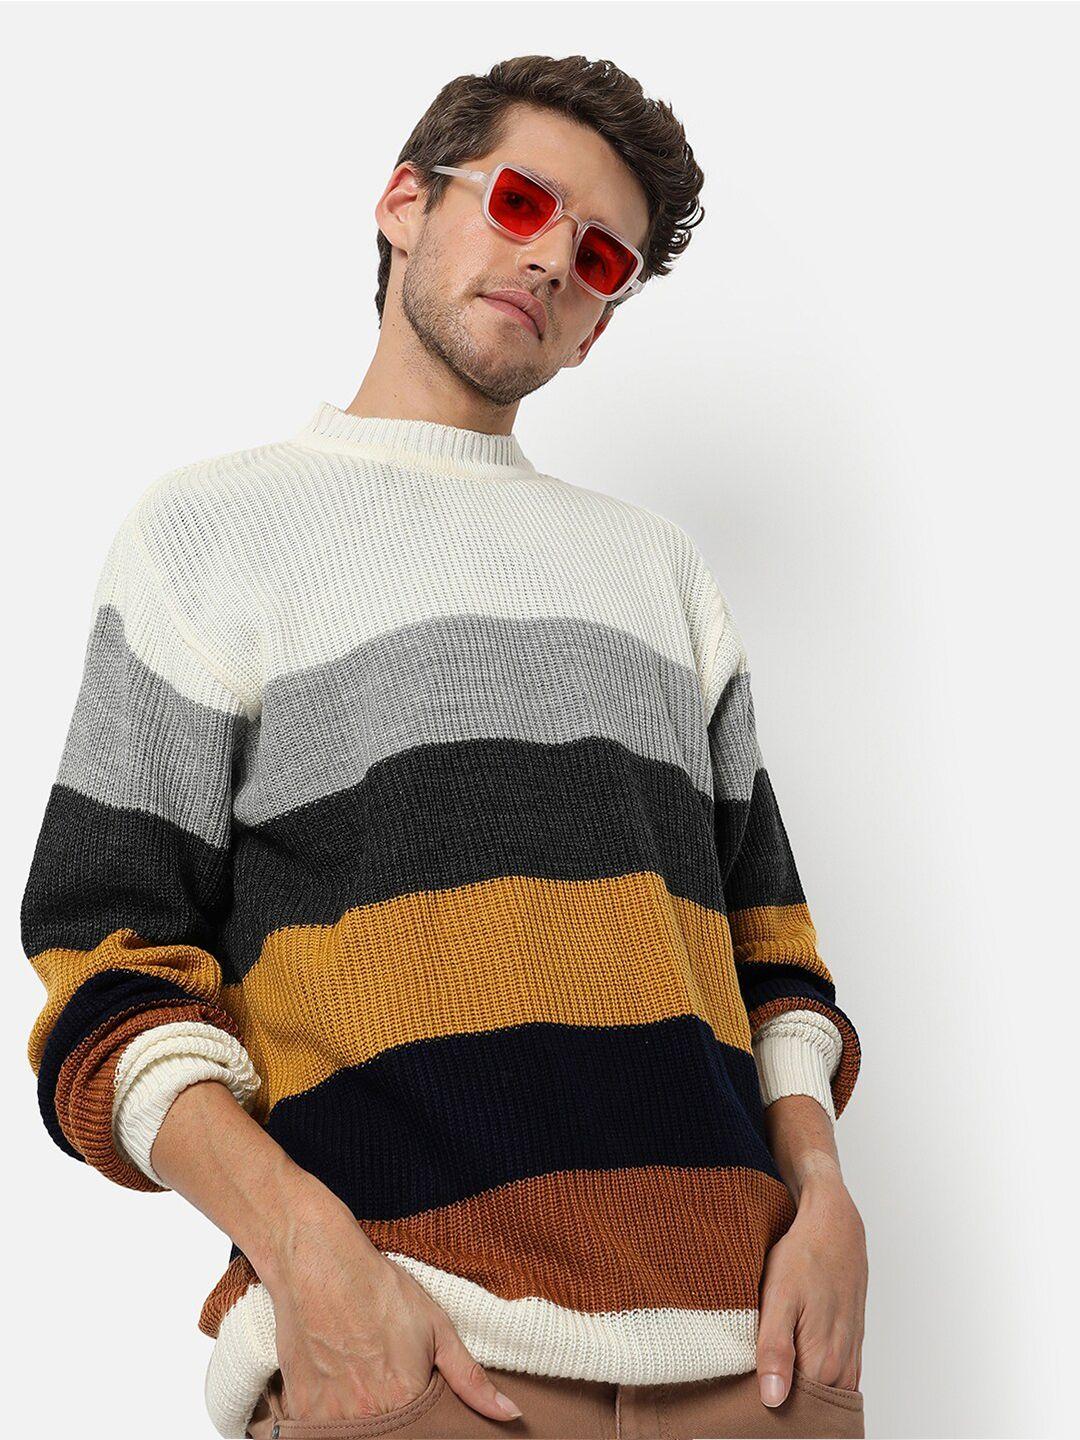 campus sutra colourblocked woollen pullover sweater